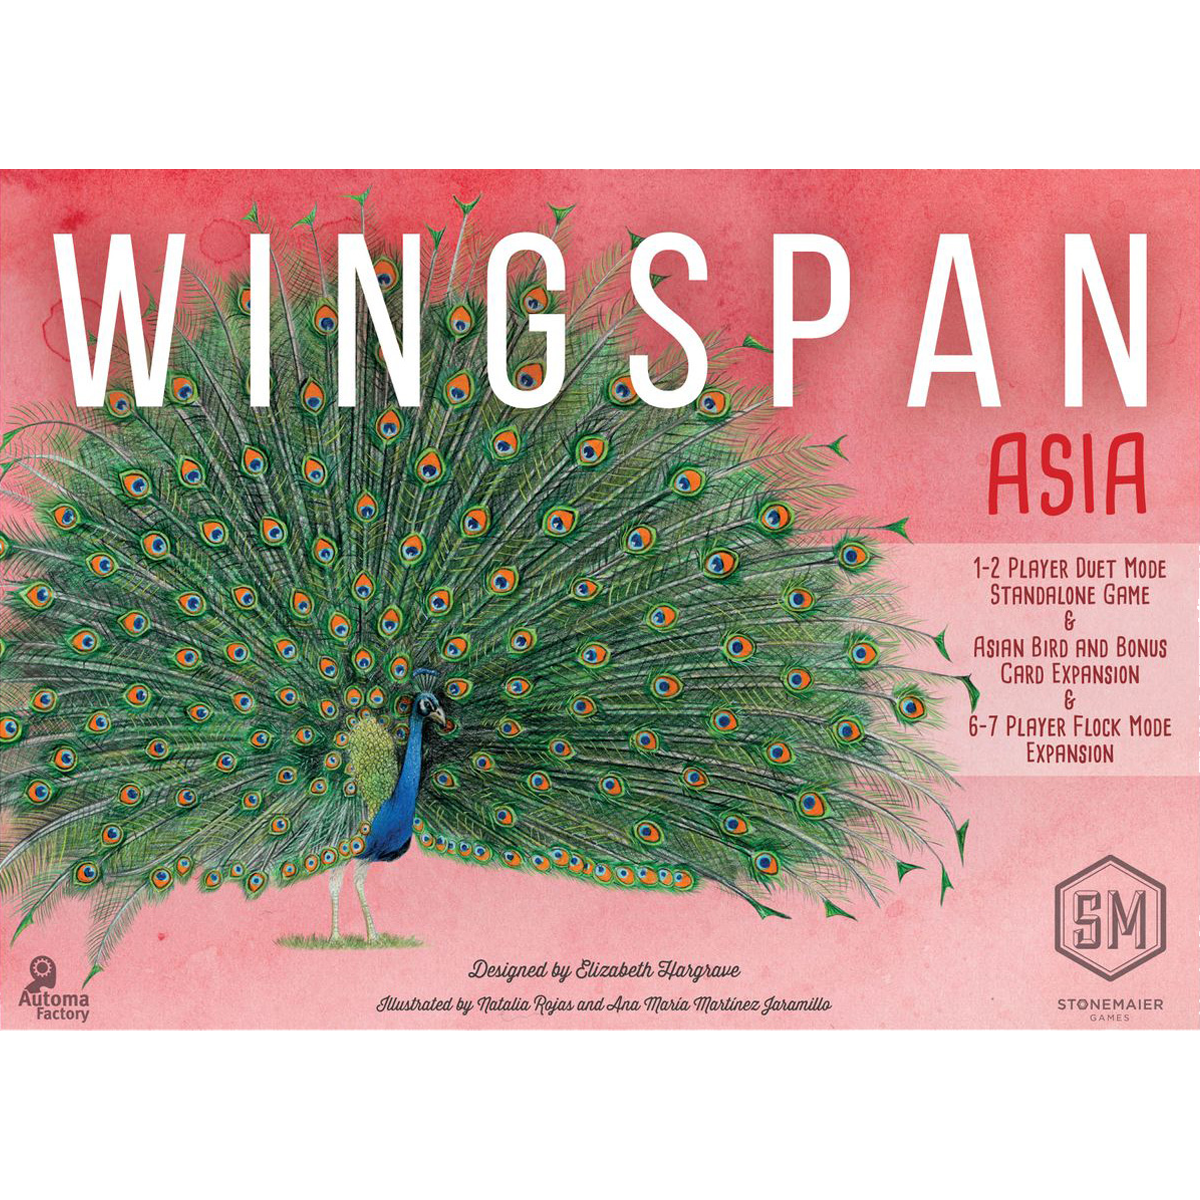 Wingspan score shit. Asia expansion